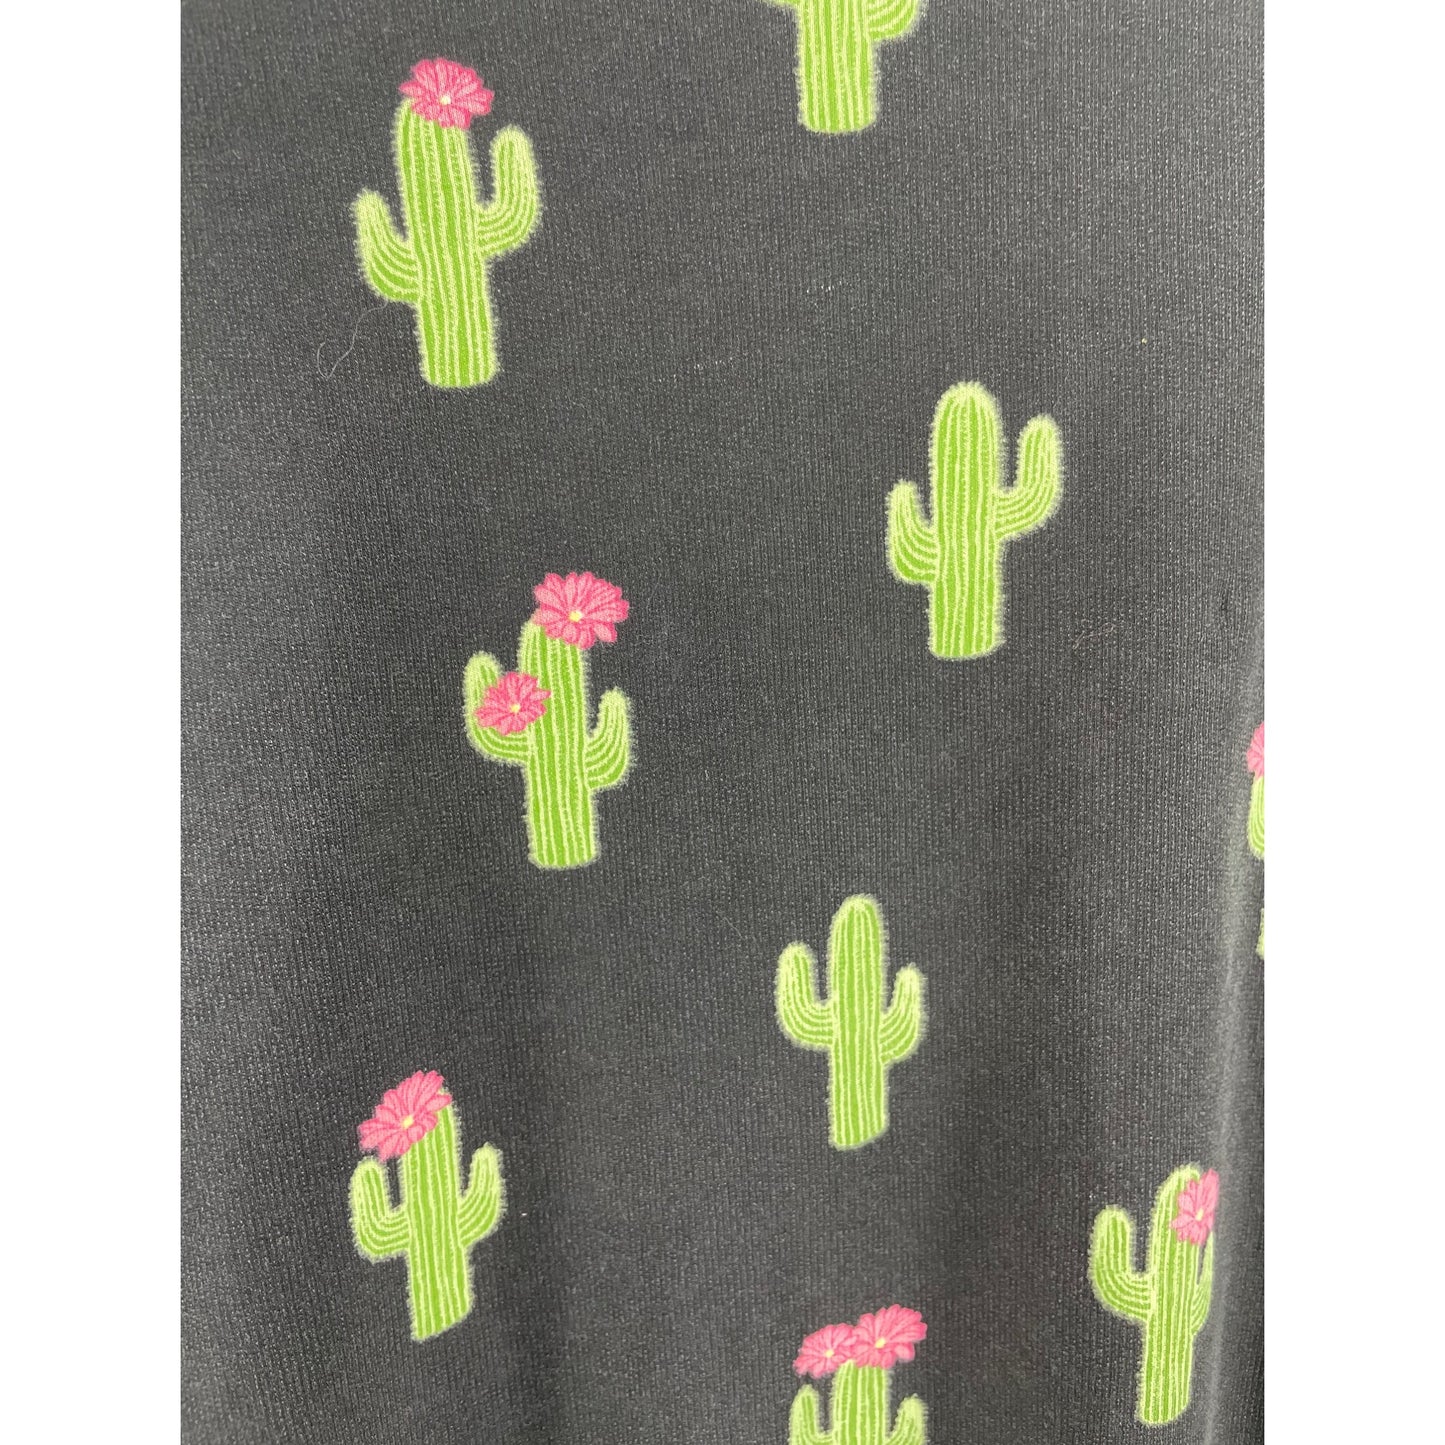 H&M Women's Size Medium Black, Green & Pink Cactus Print Sweatshirt